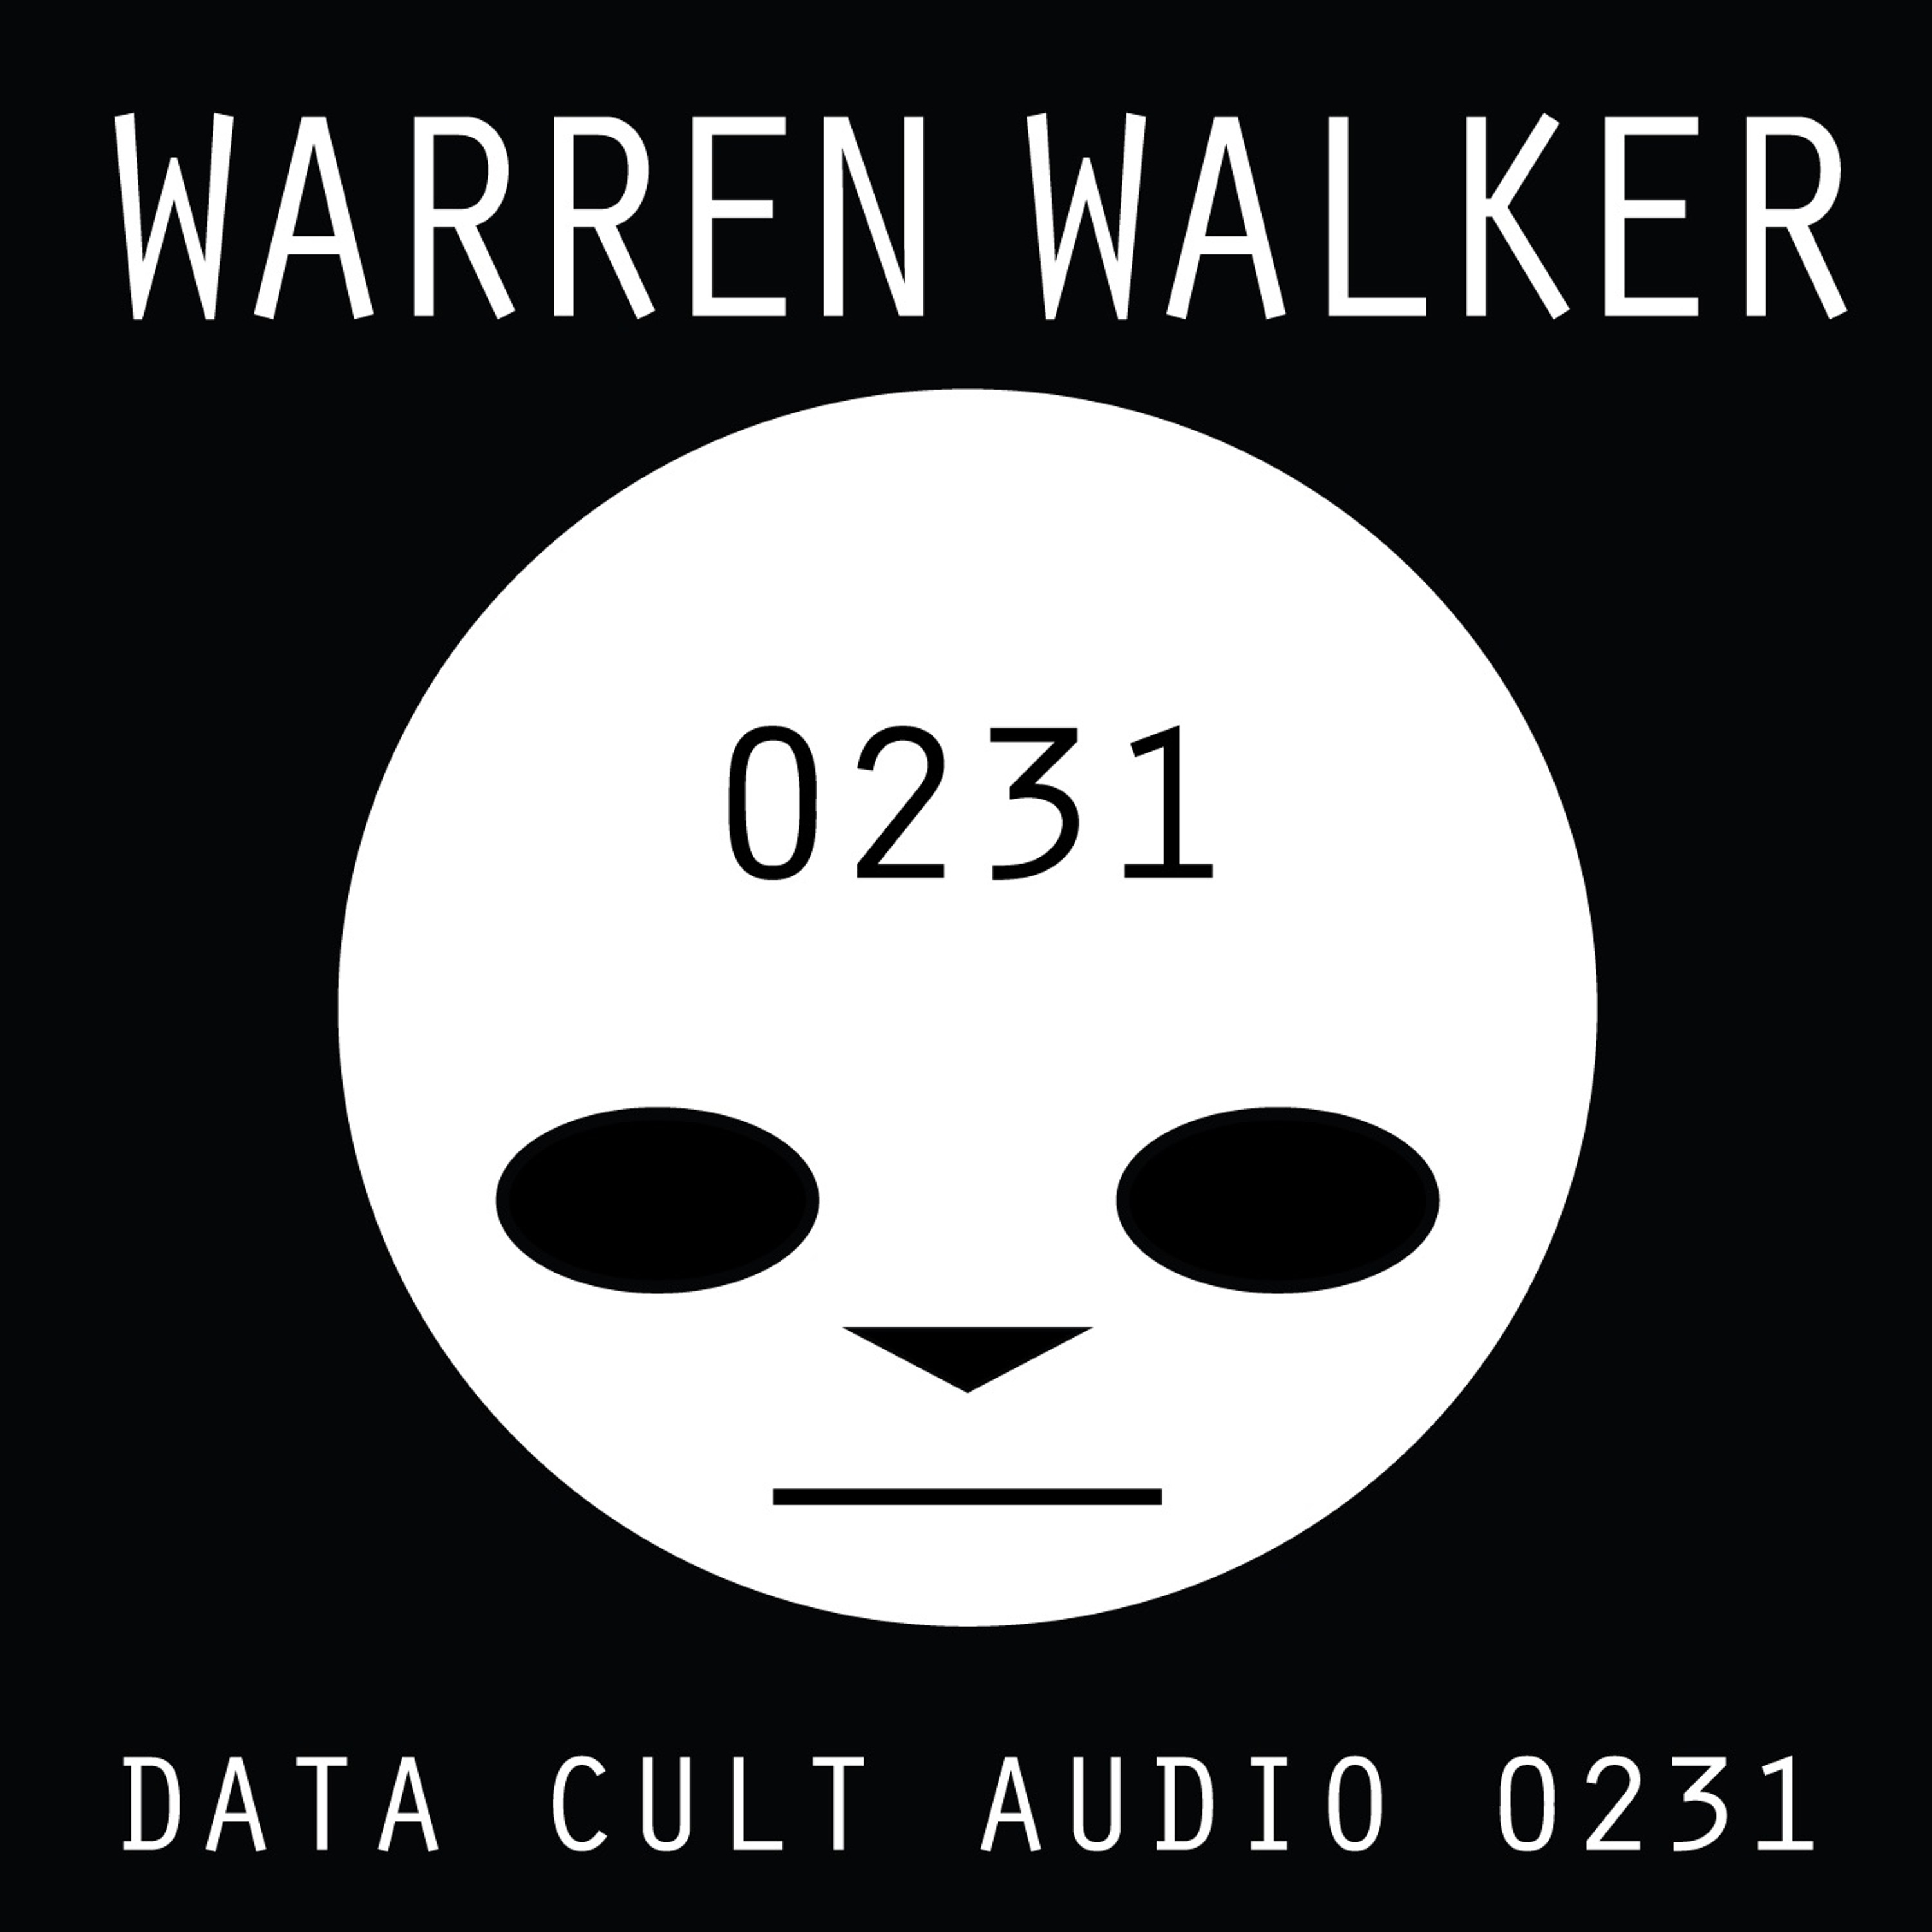 Data Cult Audio 0231 - Warren Walker